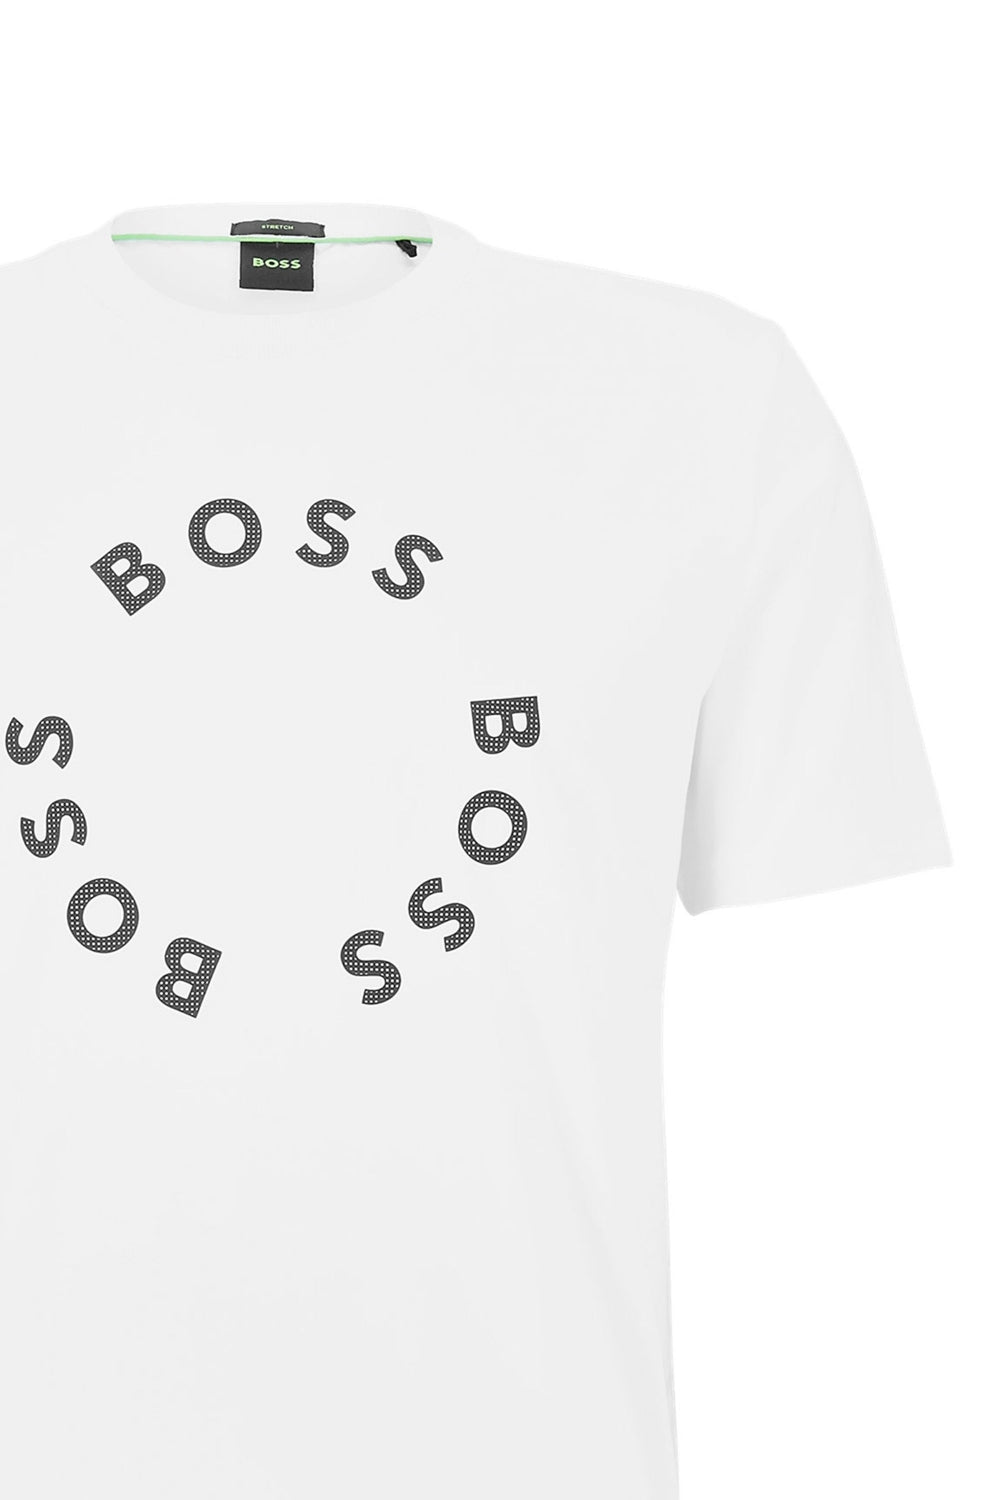 BOSS Green Tee 4 T-Shirt - 100 White - Escape Menswear